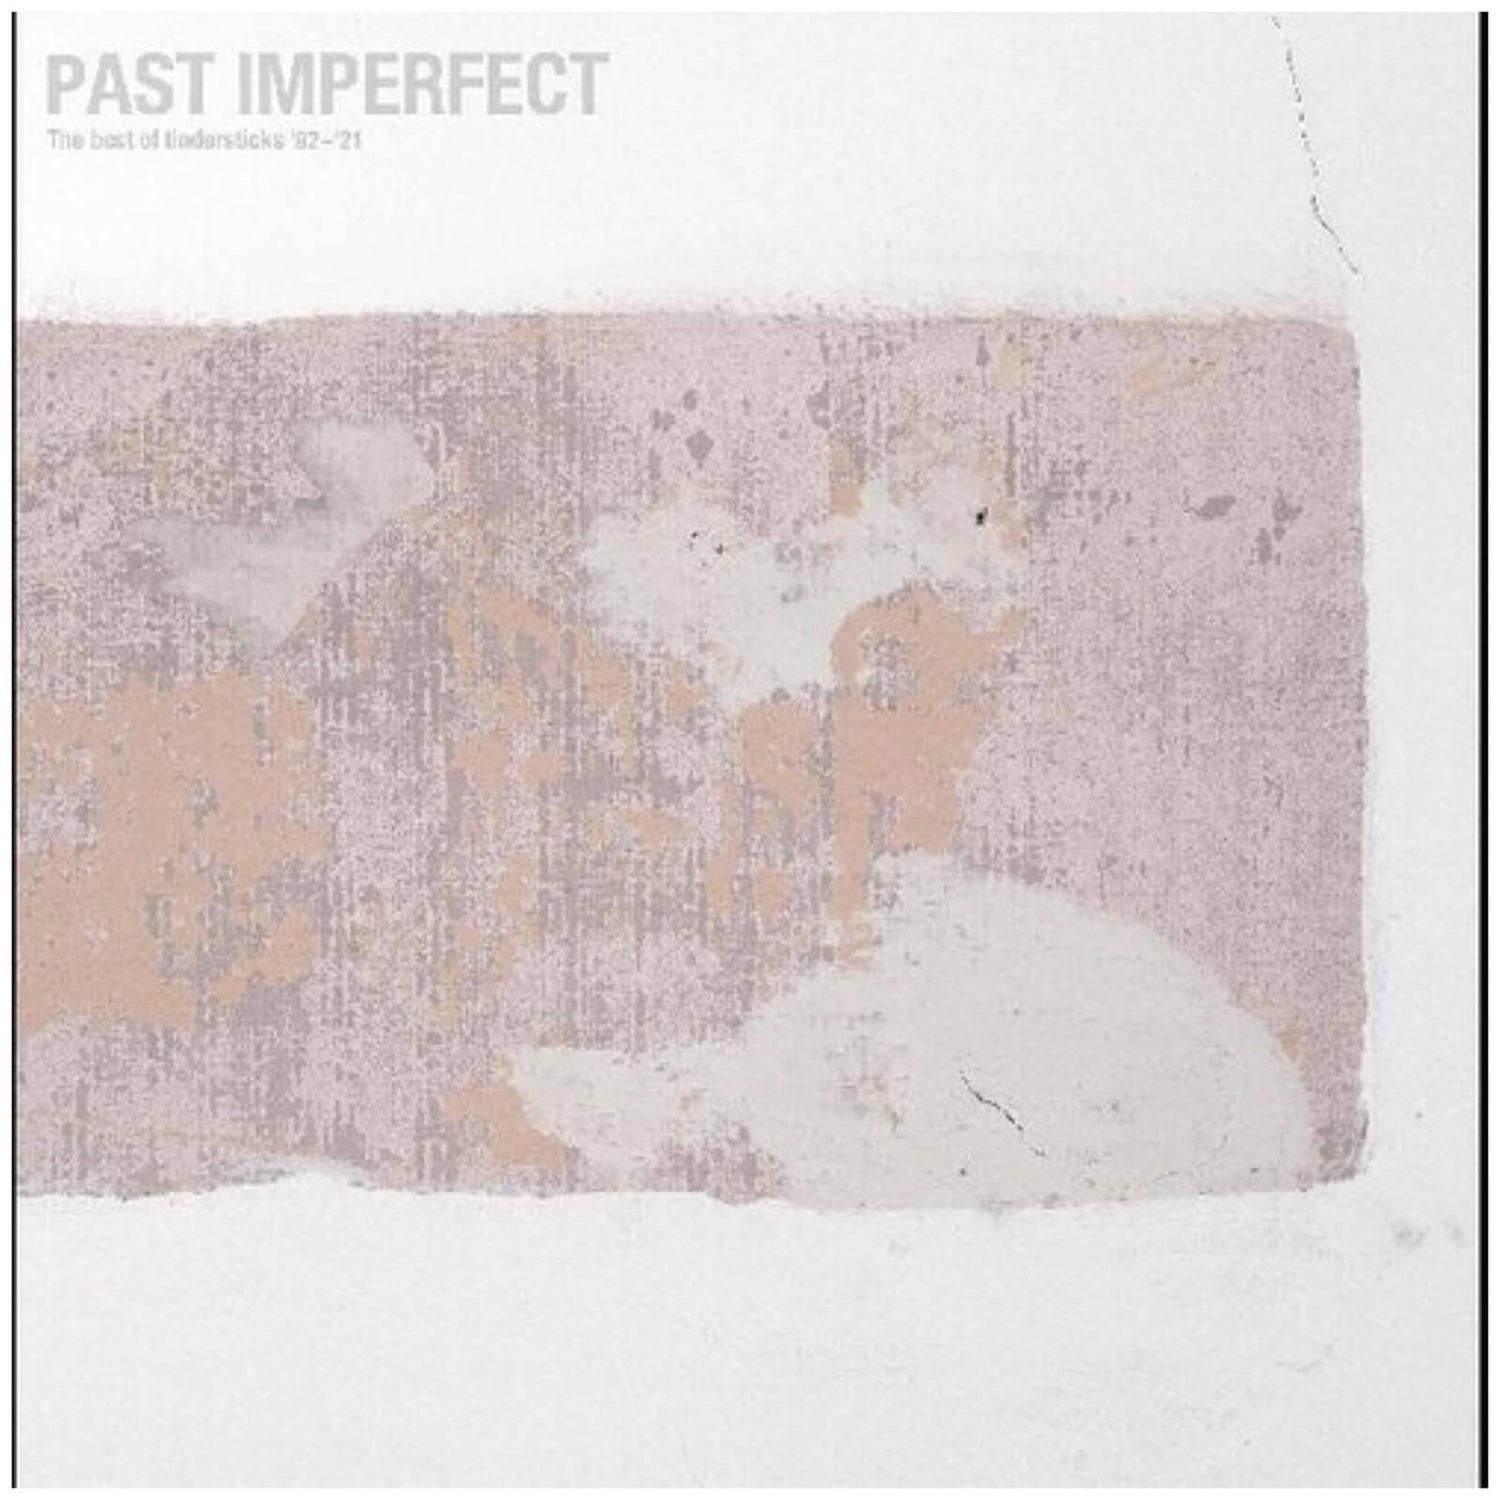 Tindersticks - Past Imperfect: The Best Of Tindersticks '92-'21 140g Vinyl 2LP